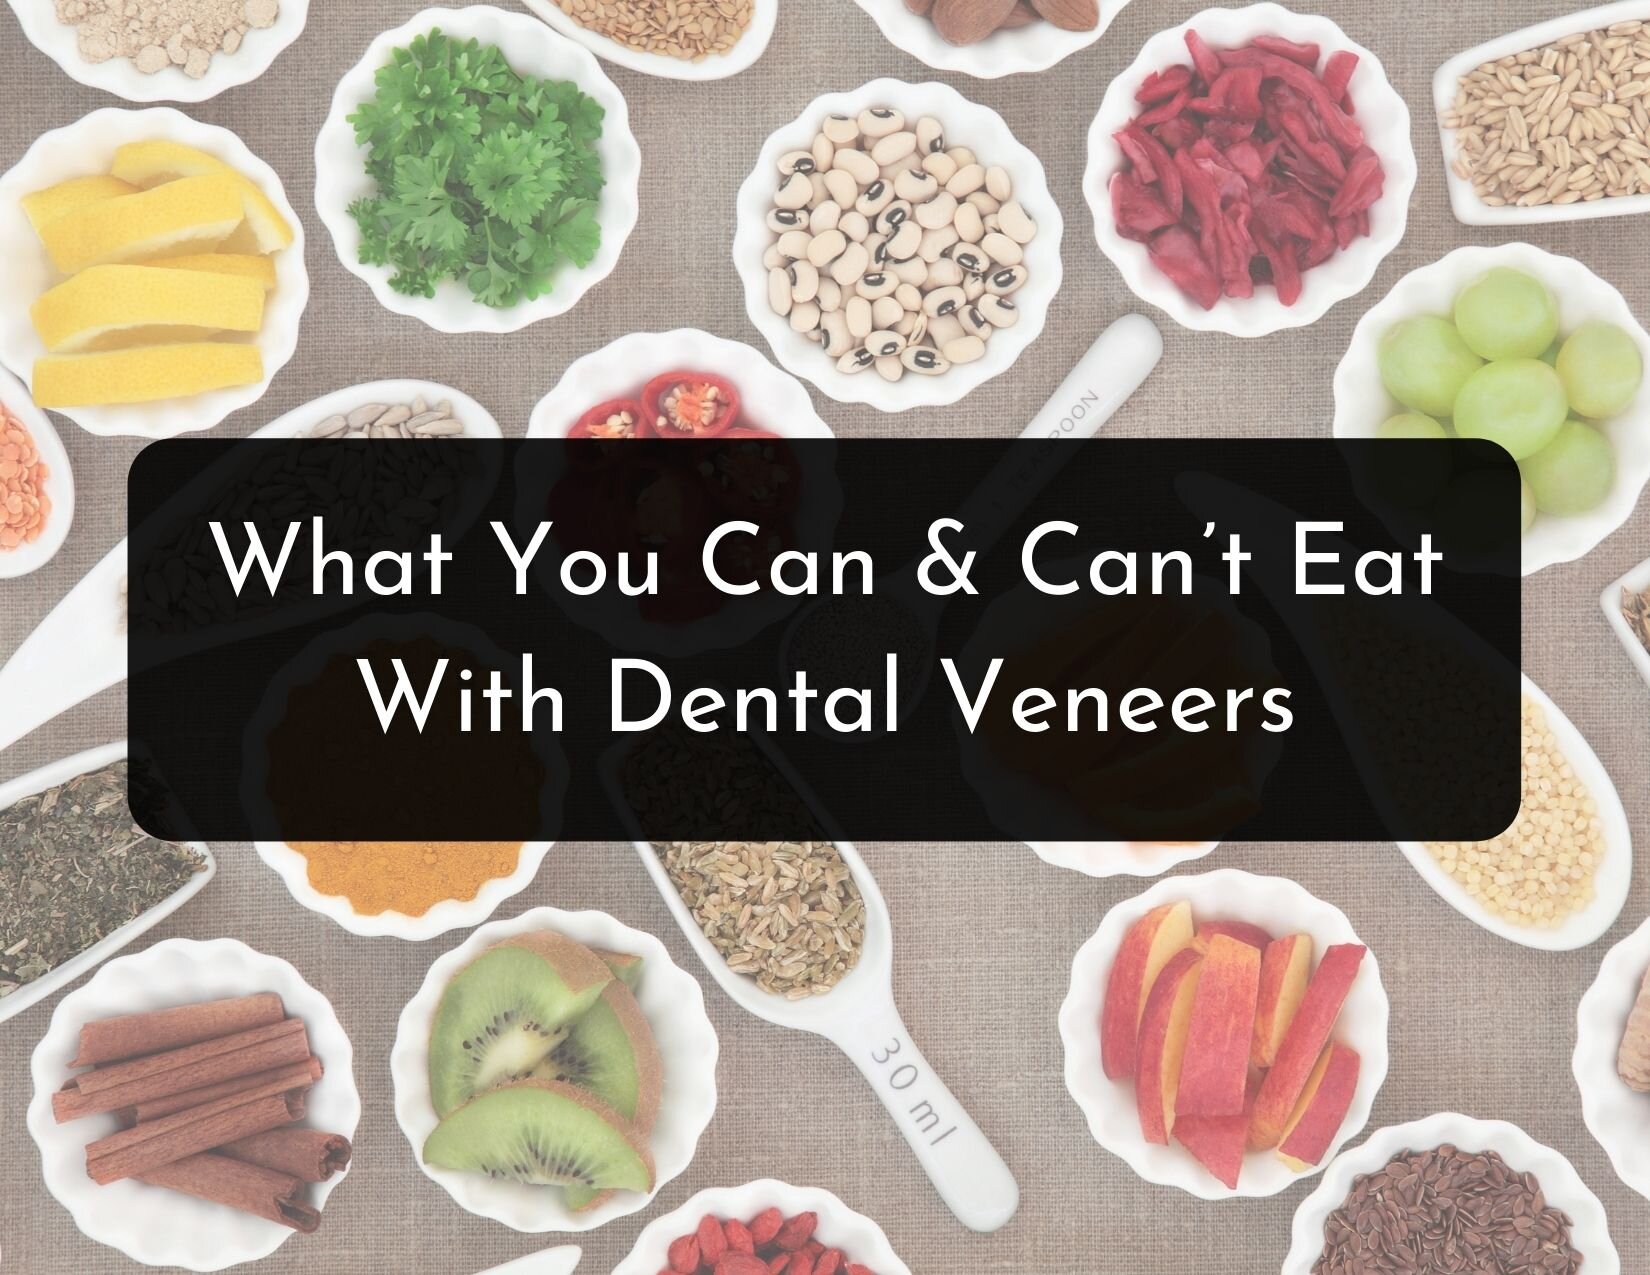 Can You Eat With Dental Veneers?